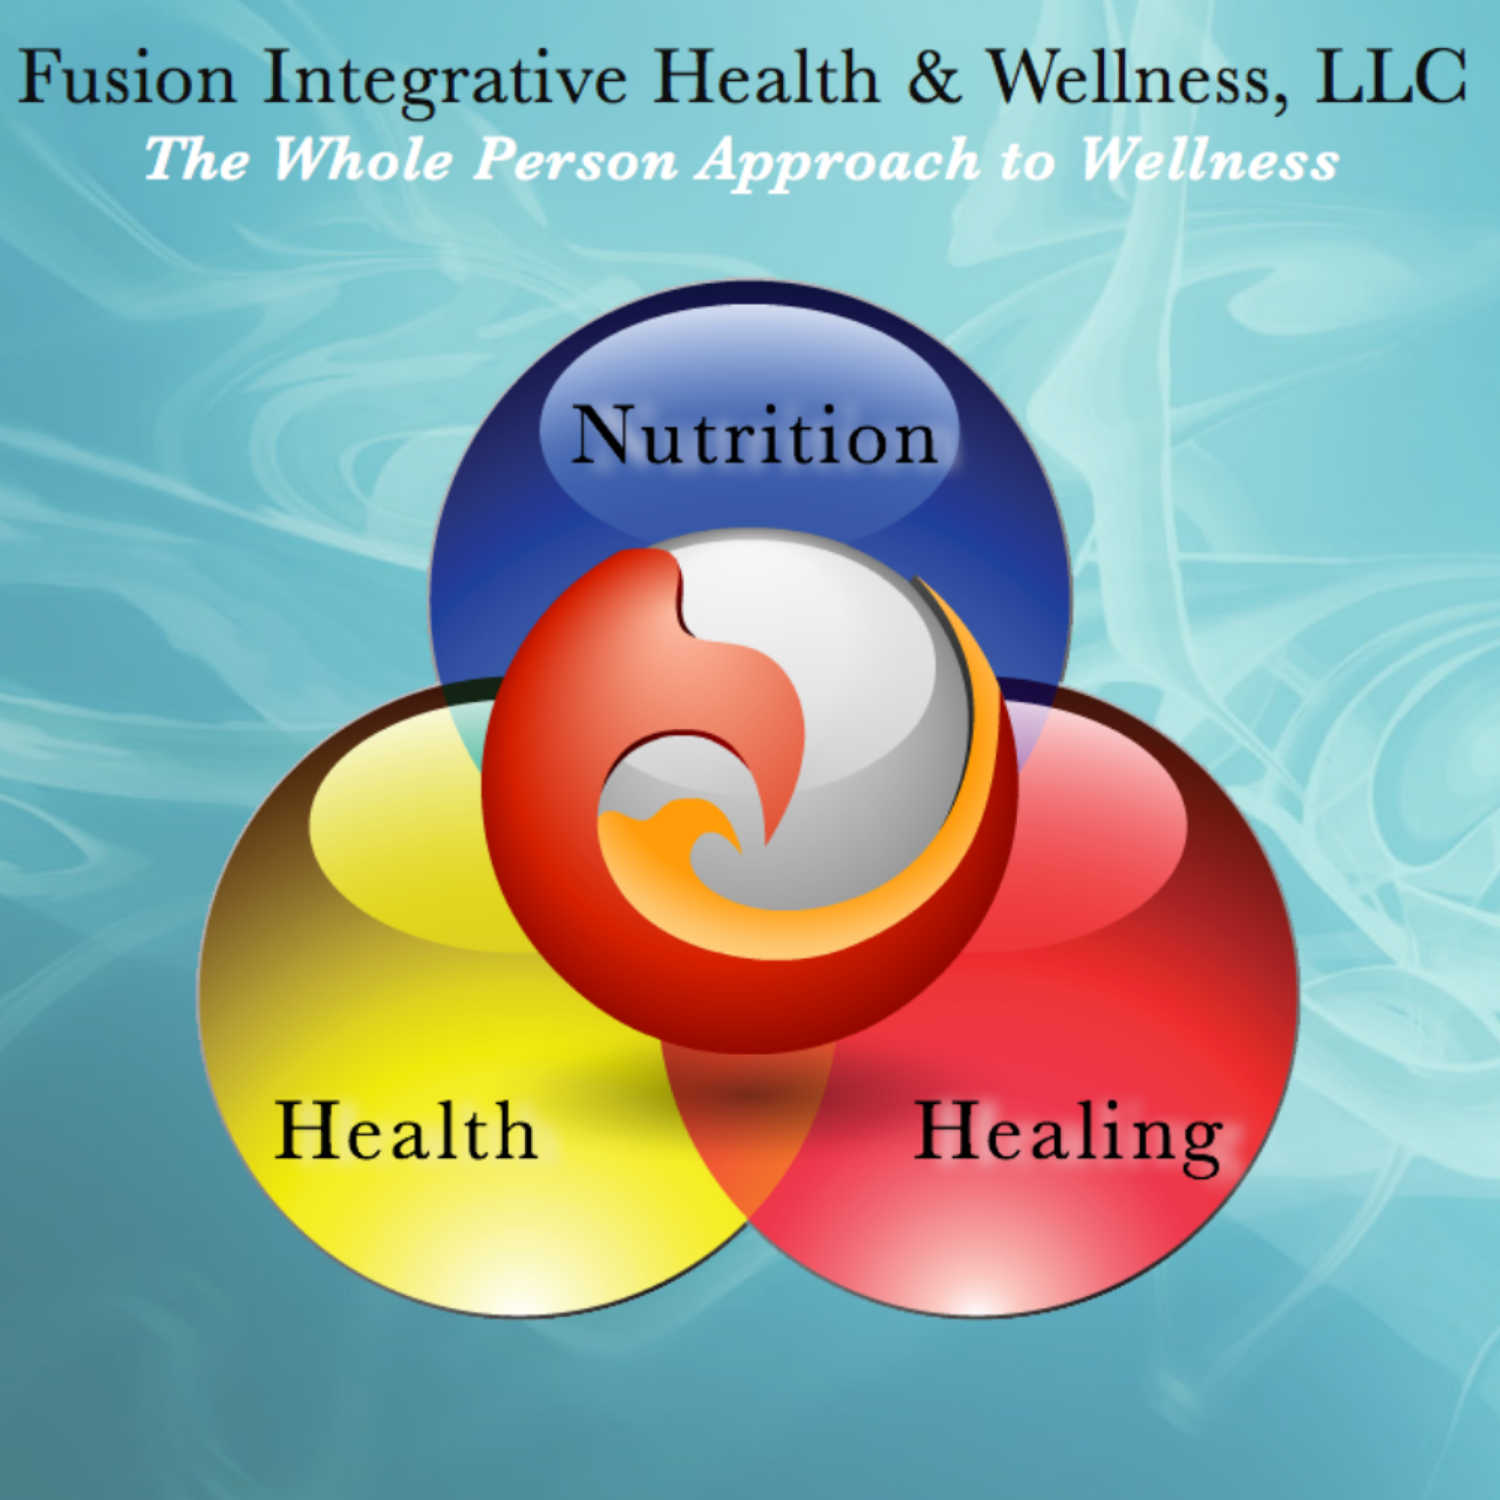 Fusion Integrative Health & Wellness, LLC